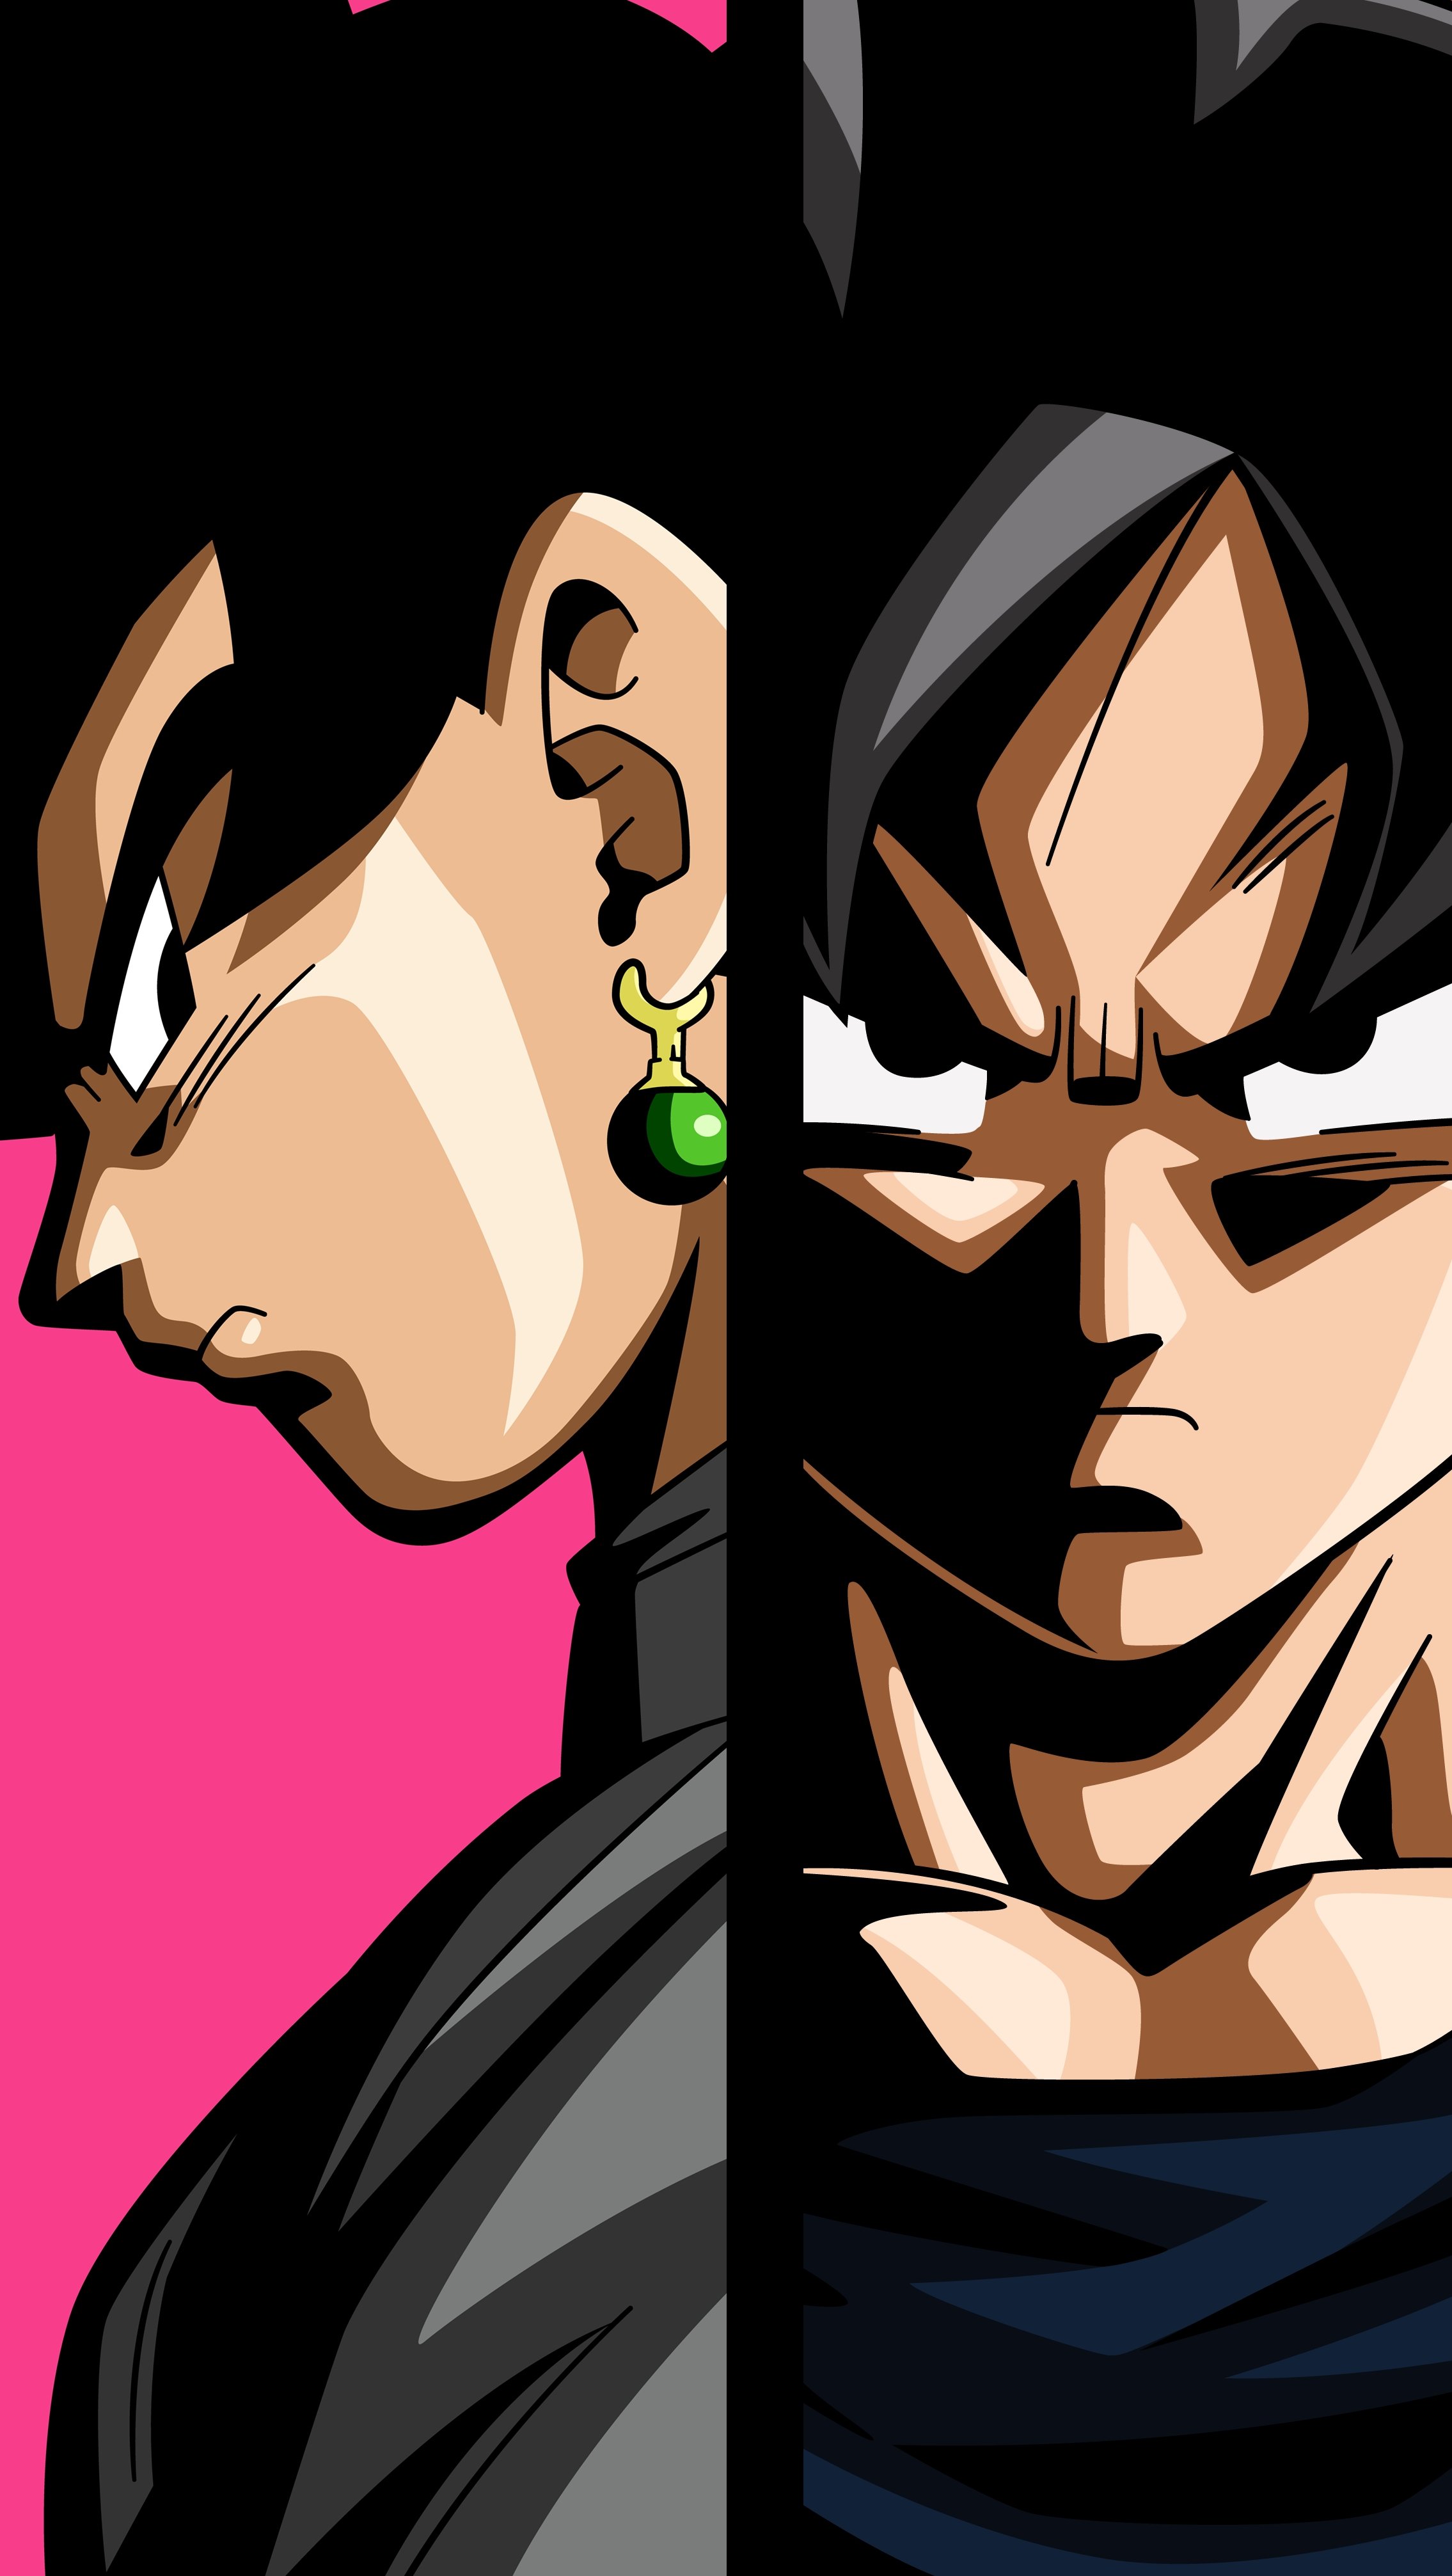 Dragon Ball Super, Mai, Black Goku, Goku, Zamasu and Future Trunks Saga Anime Wallpaper